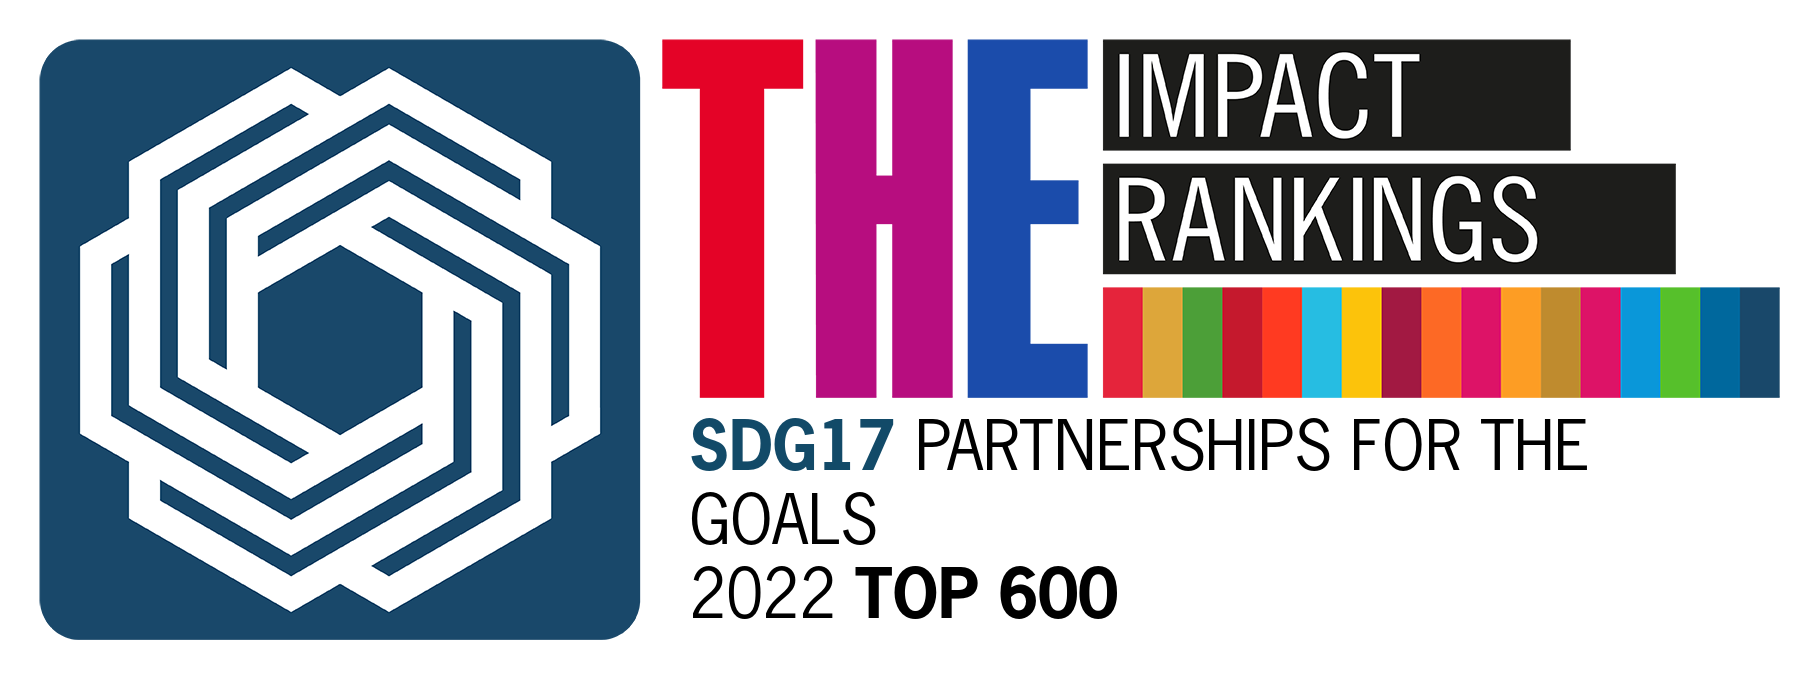 SDG17_ Partnerships for the Goals - Top 600